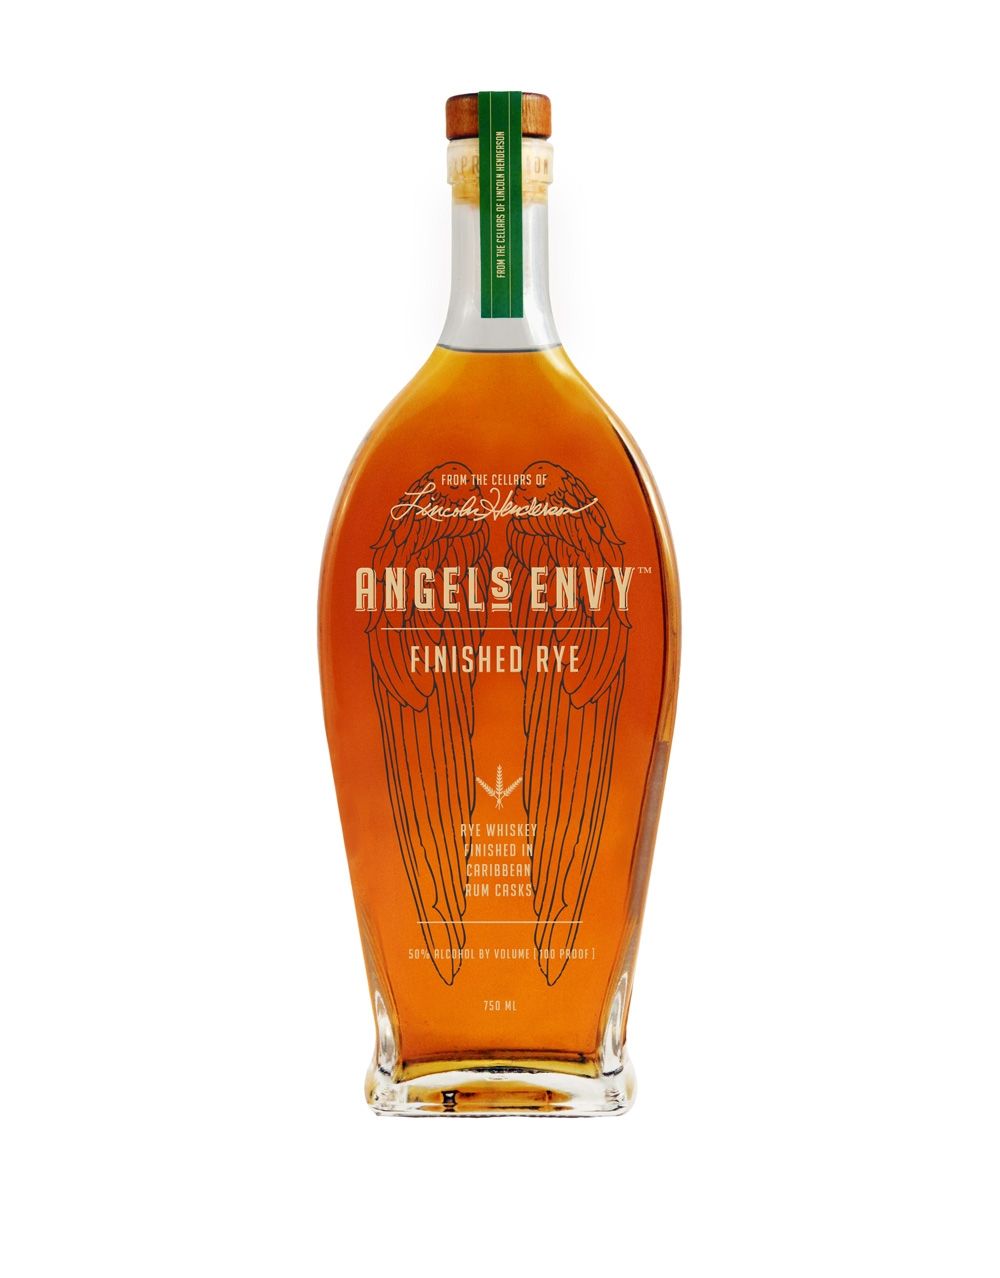 Angel’s Envy Rye Whiskey Finished in Caribbean Rum Casks bottle